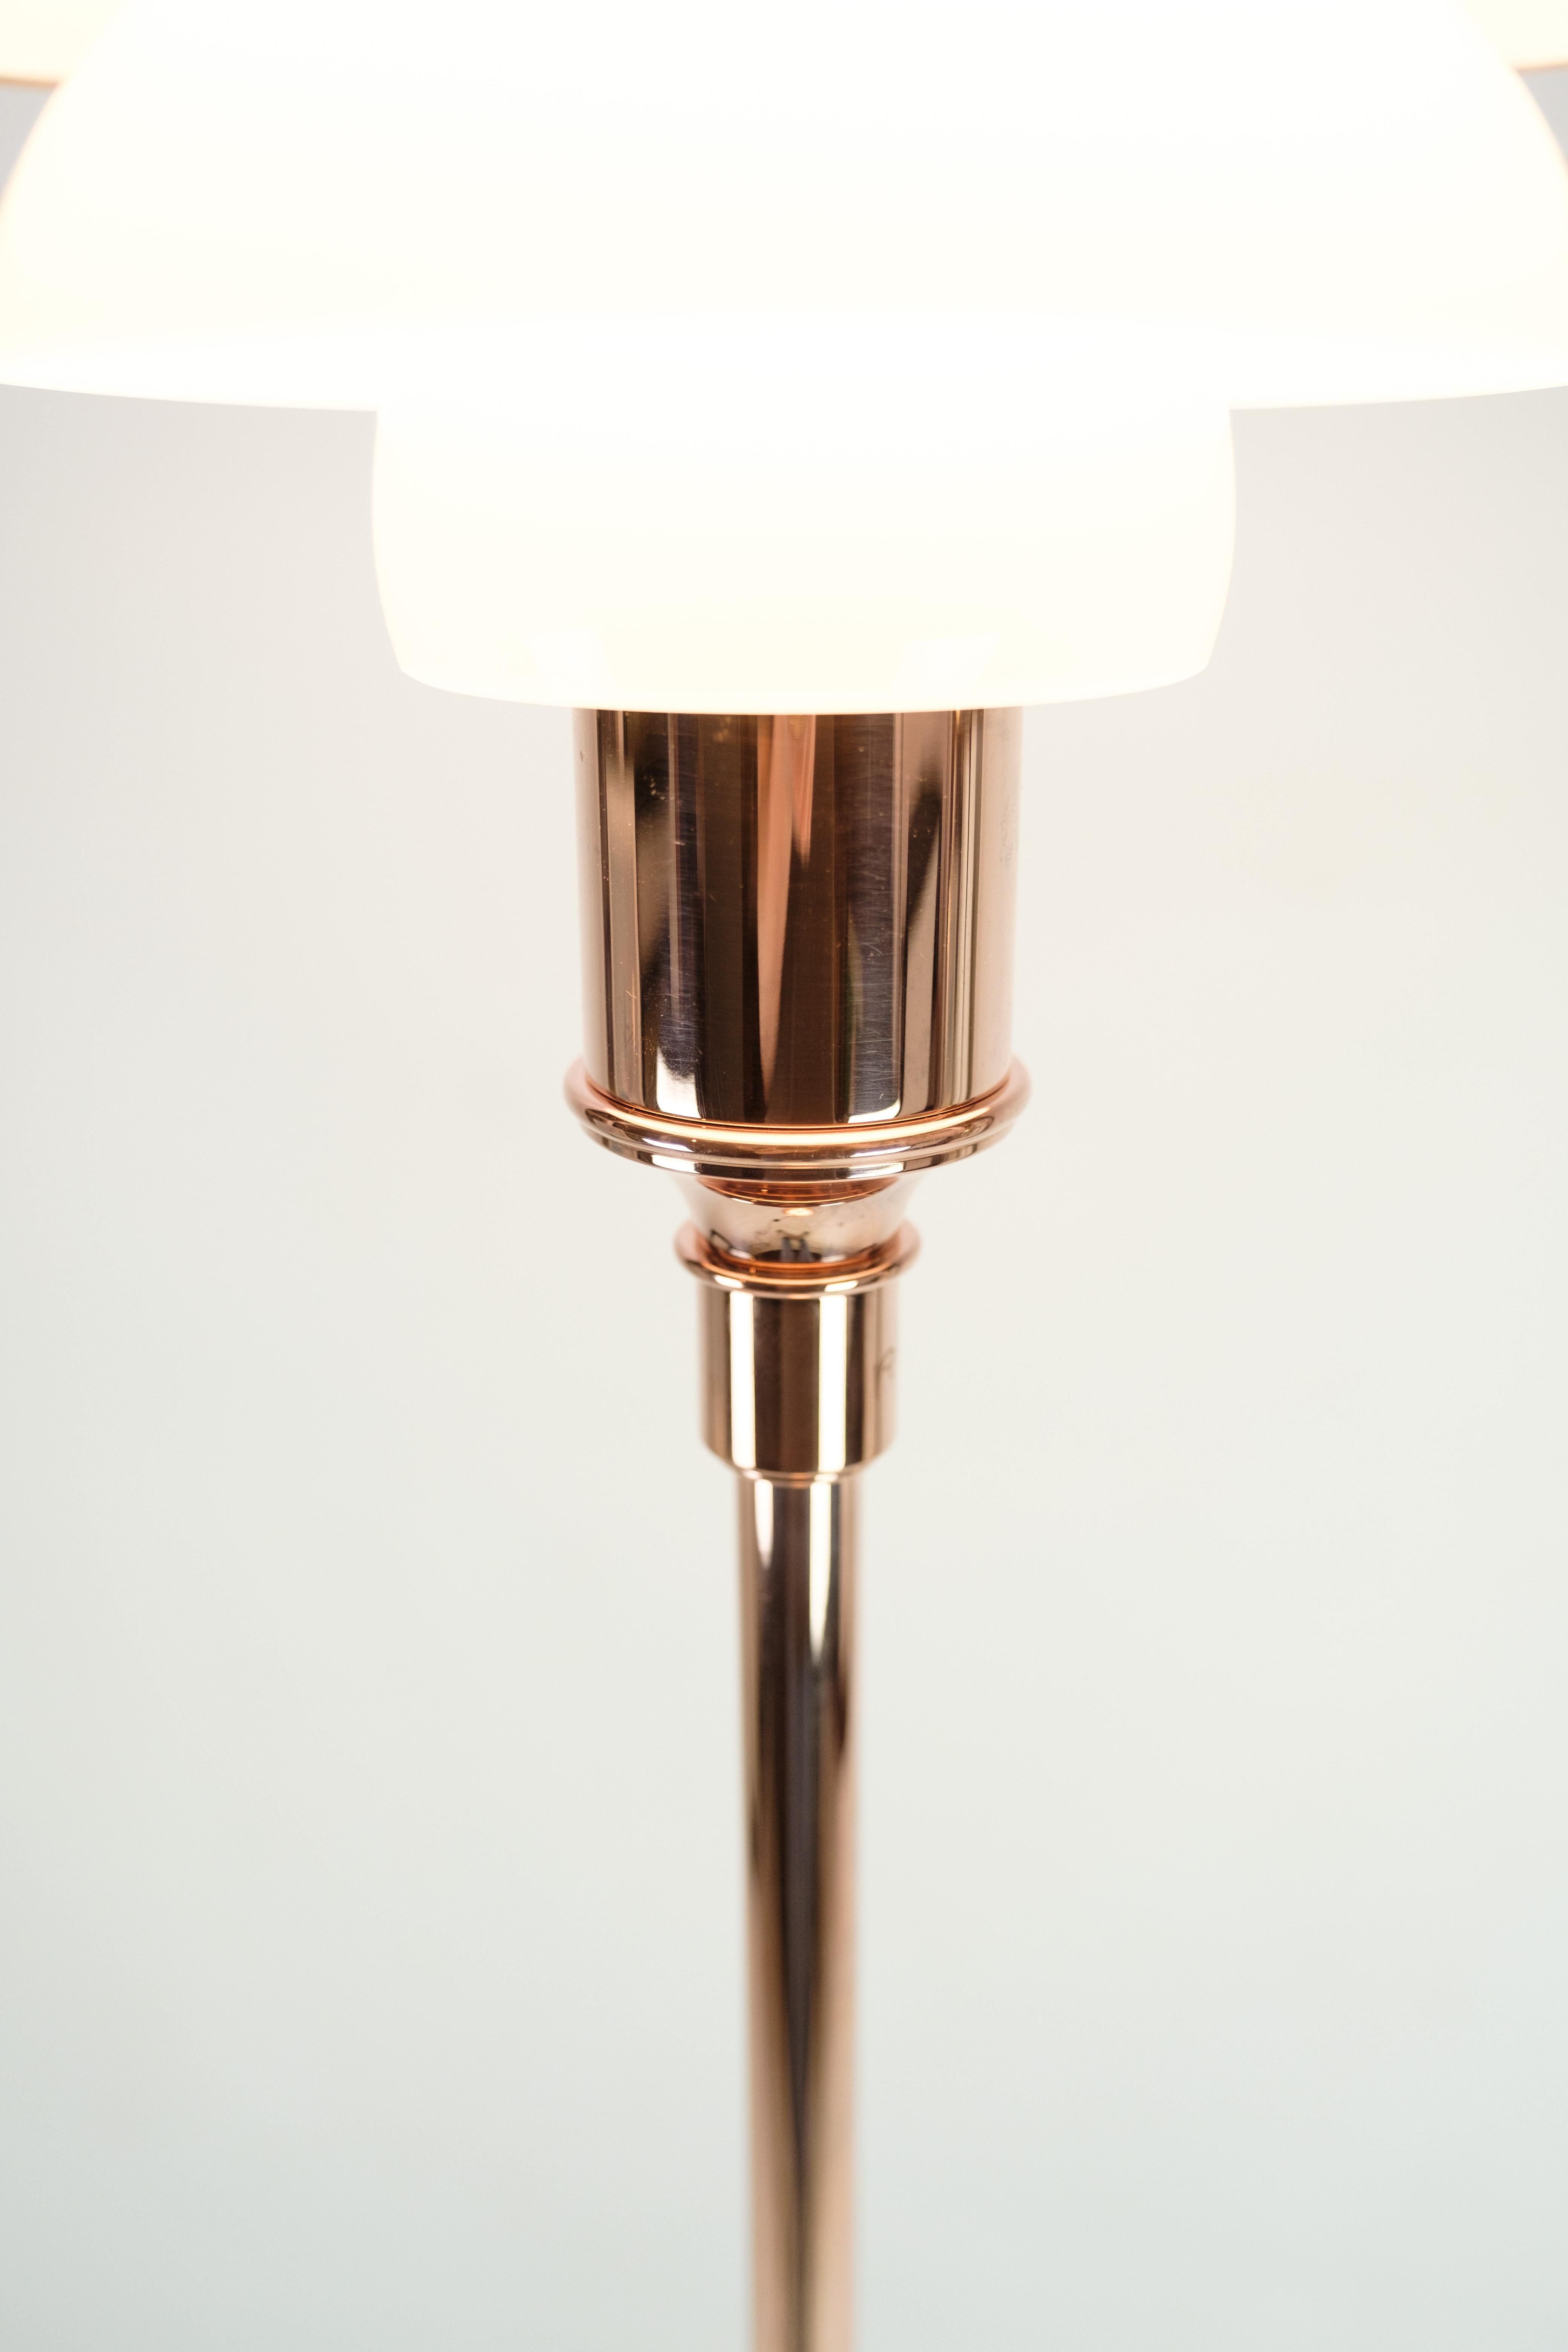 Ph Floor Lamp, Model Ph3½-2½, Limited Edition, Poul Henningsen, Louis Poulsen 1